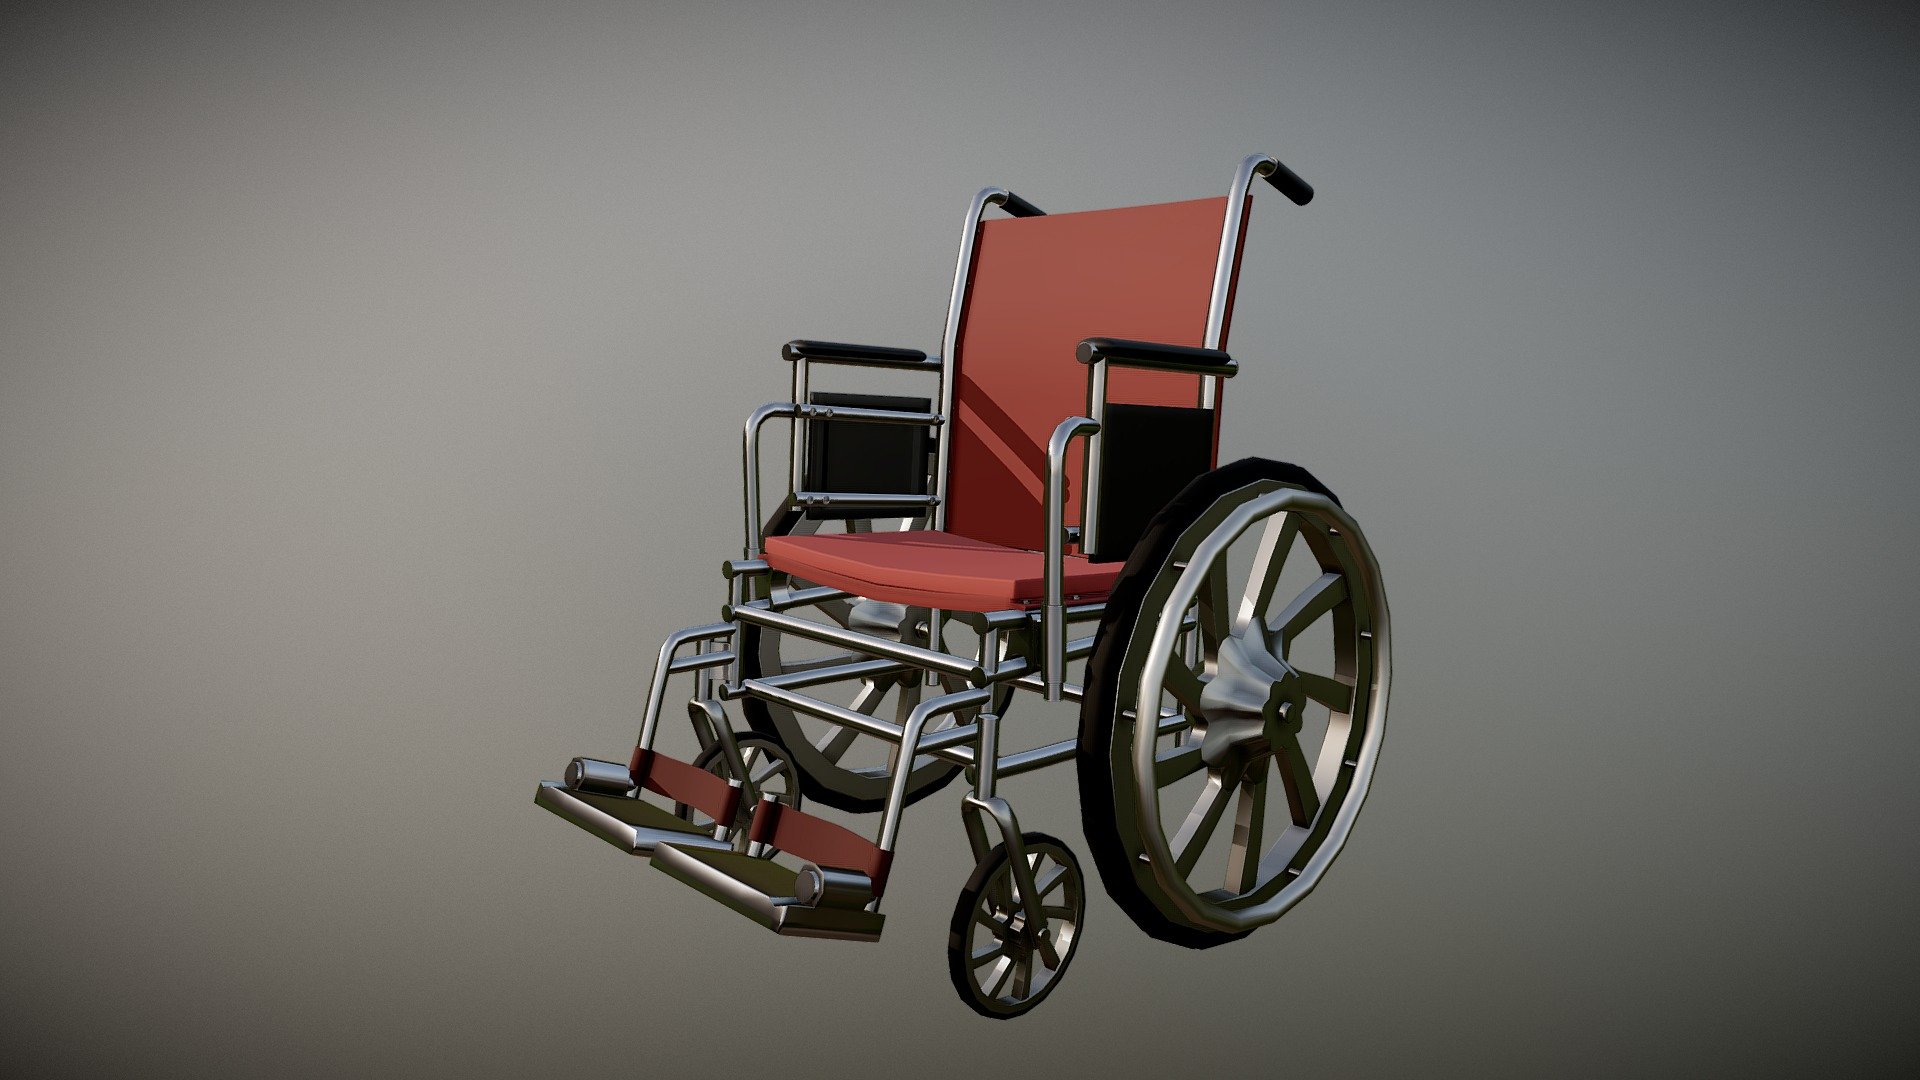 Porte 2004 wheelchair